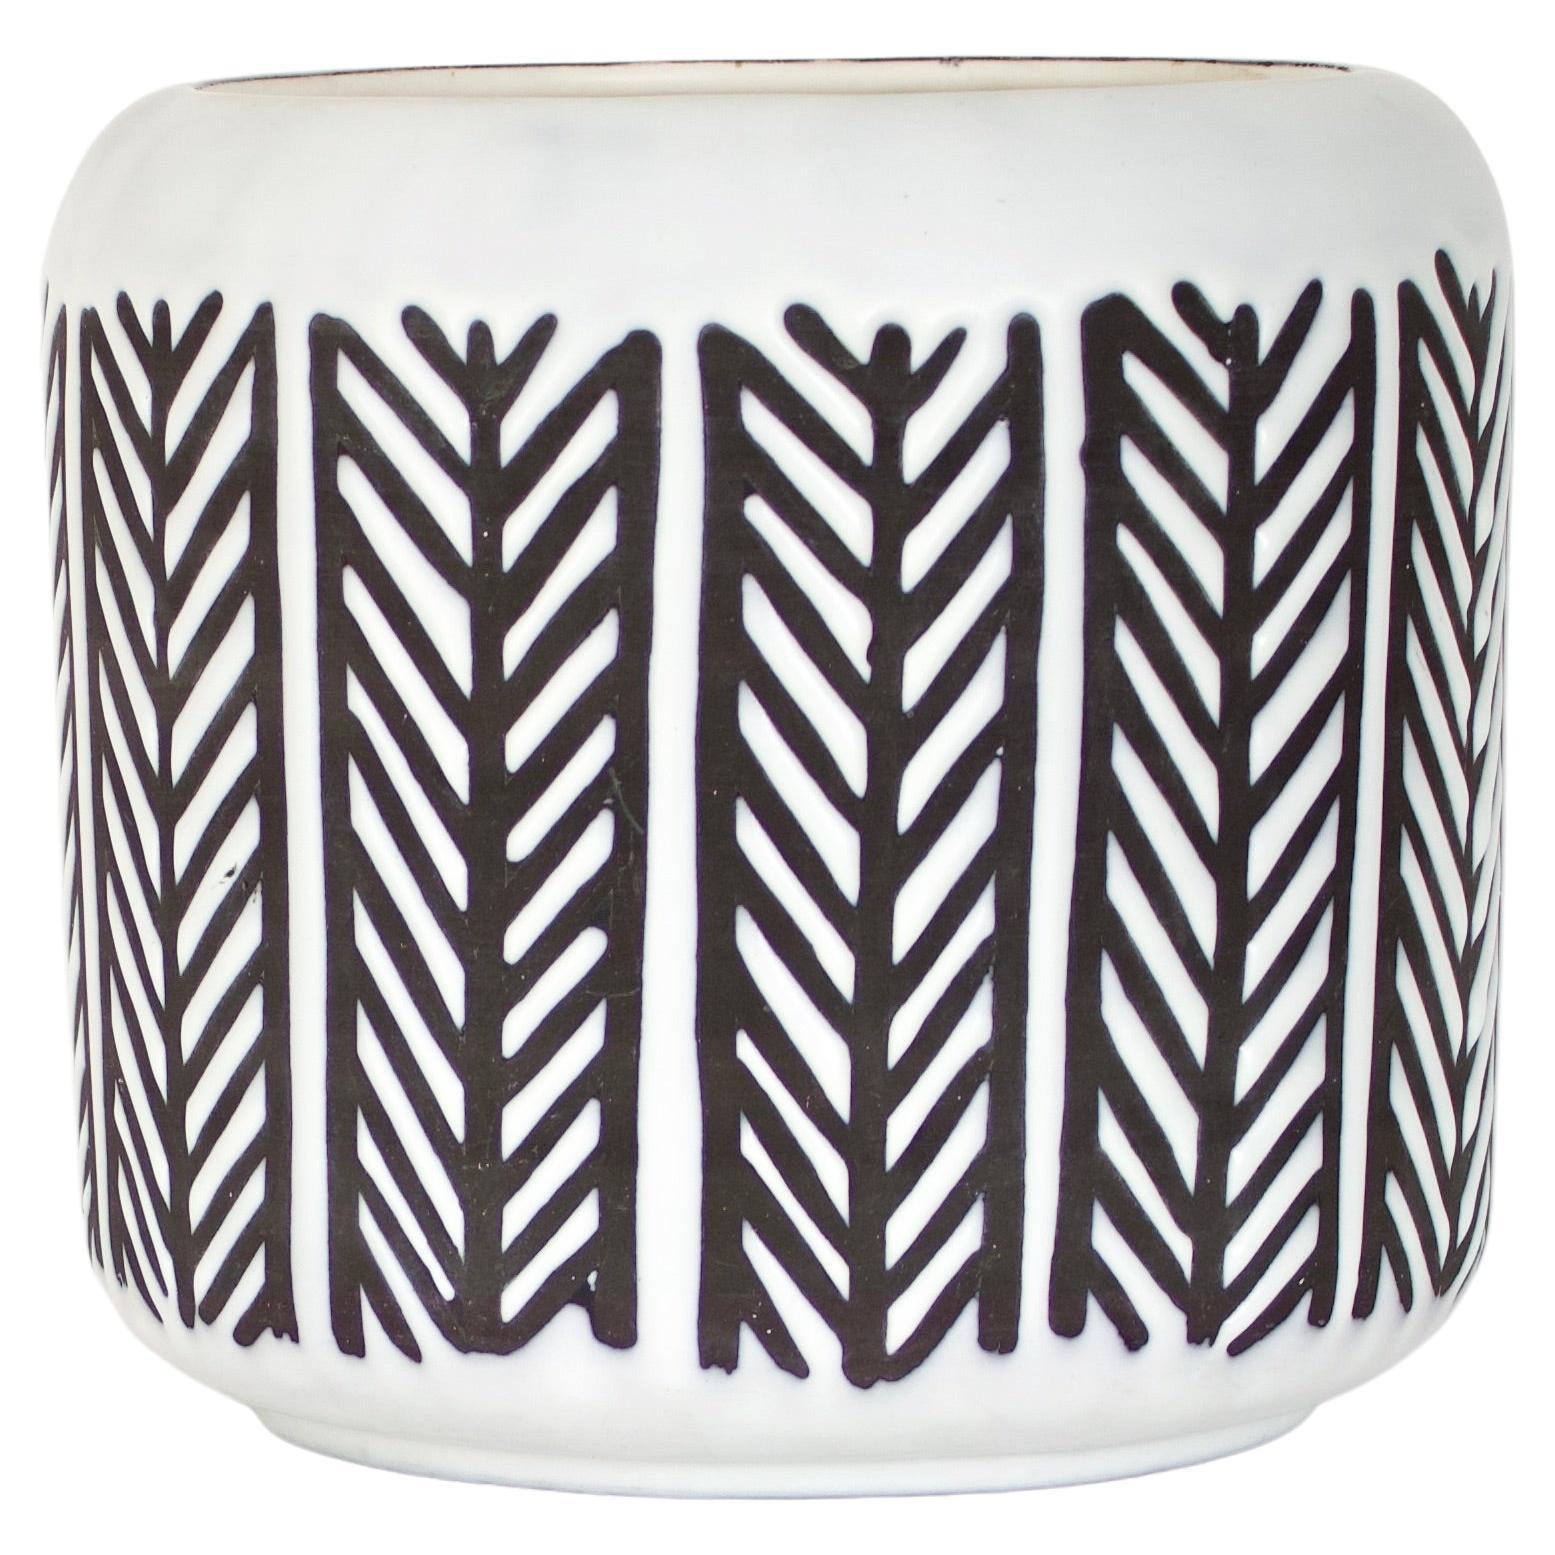 Roger Capron French Ceramic Black and White Cache Pot or Vase, Circa 1956